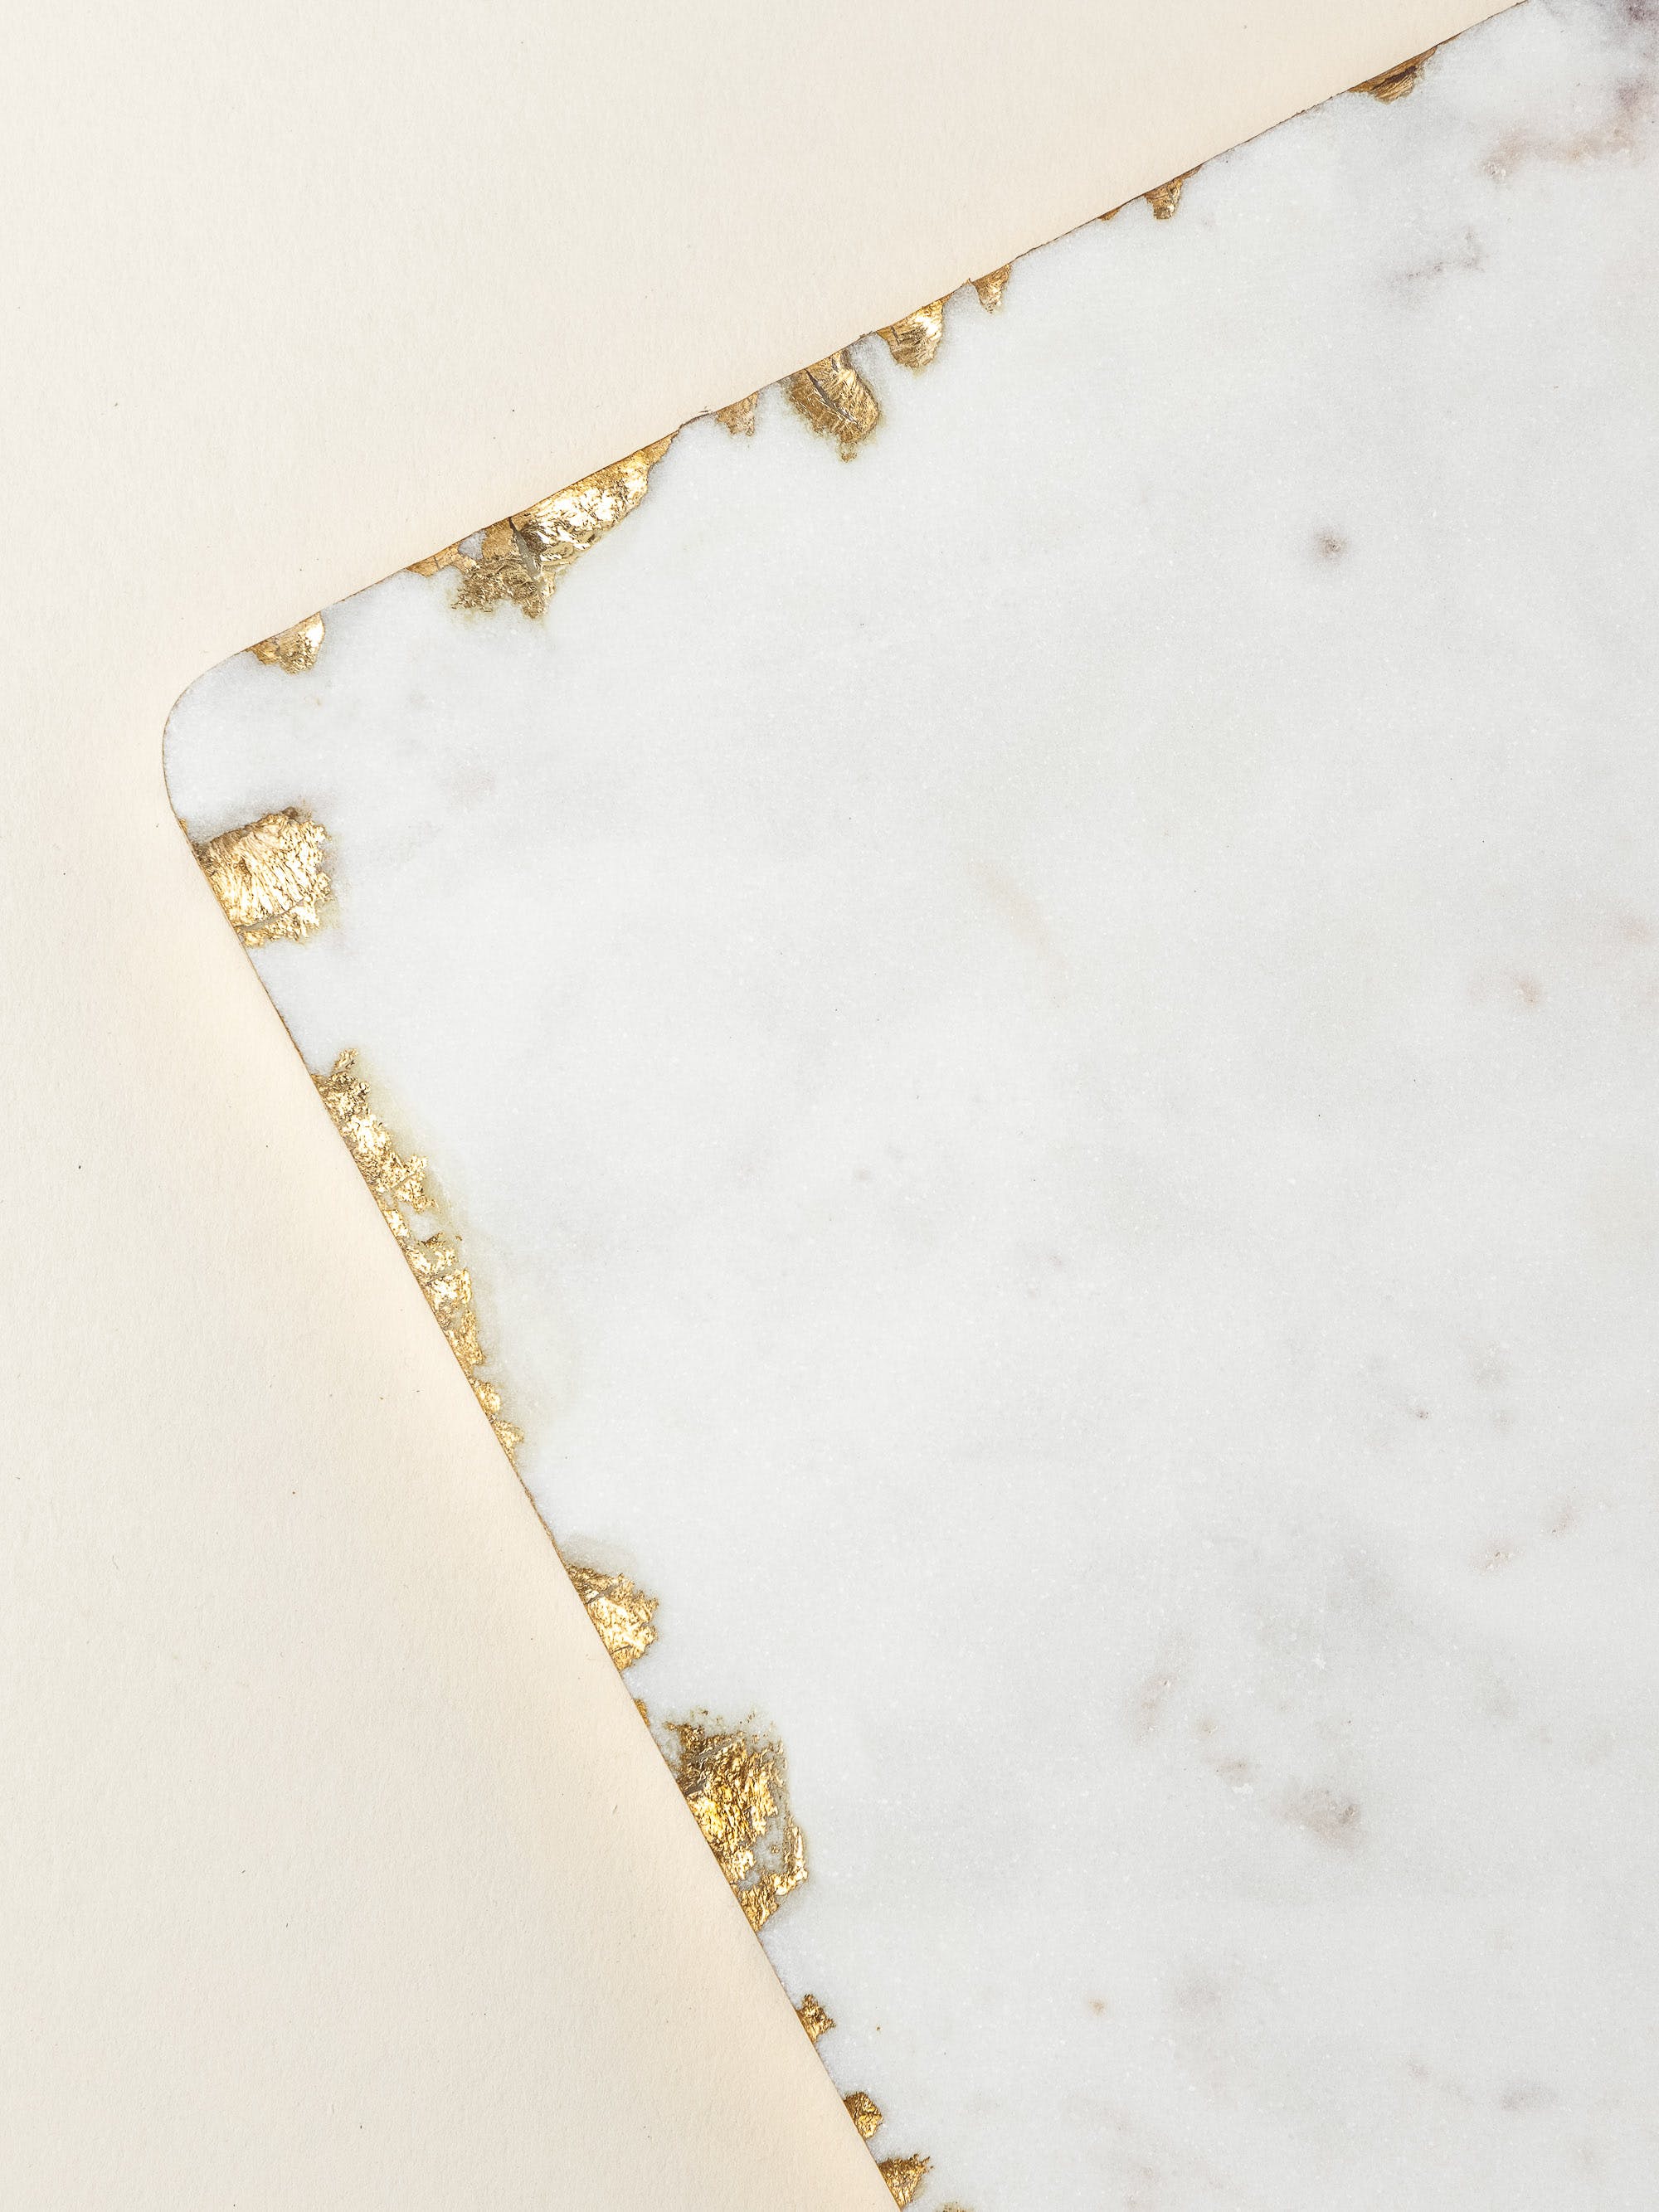 White marble / gold foil